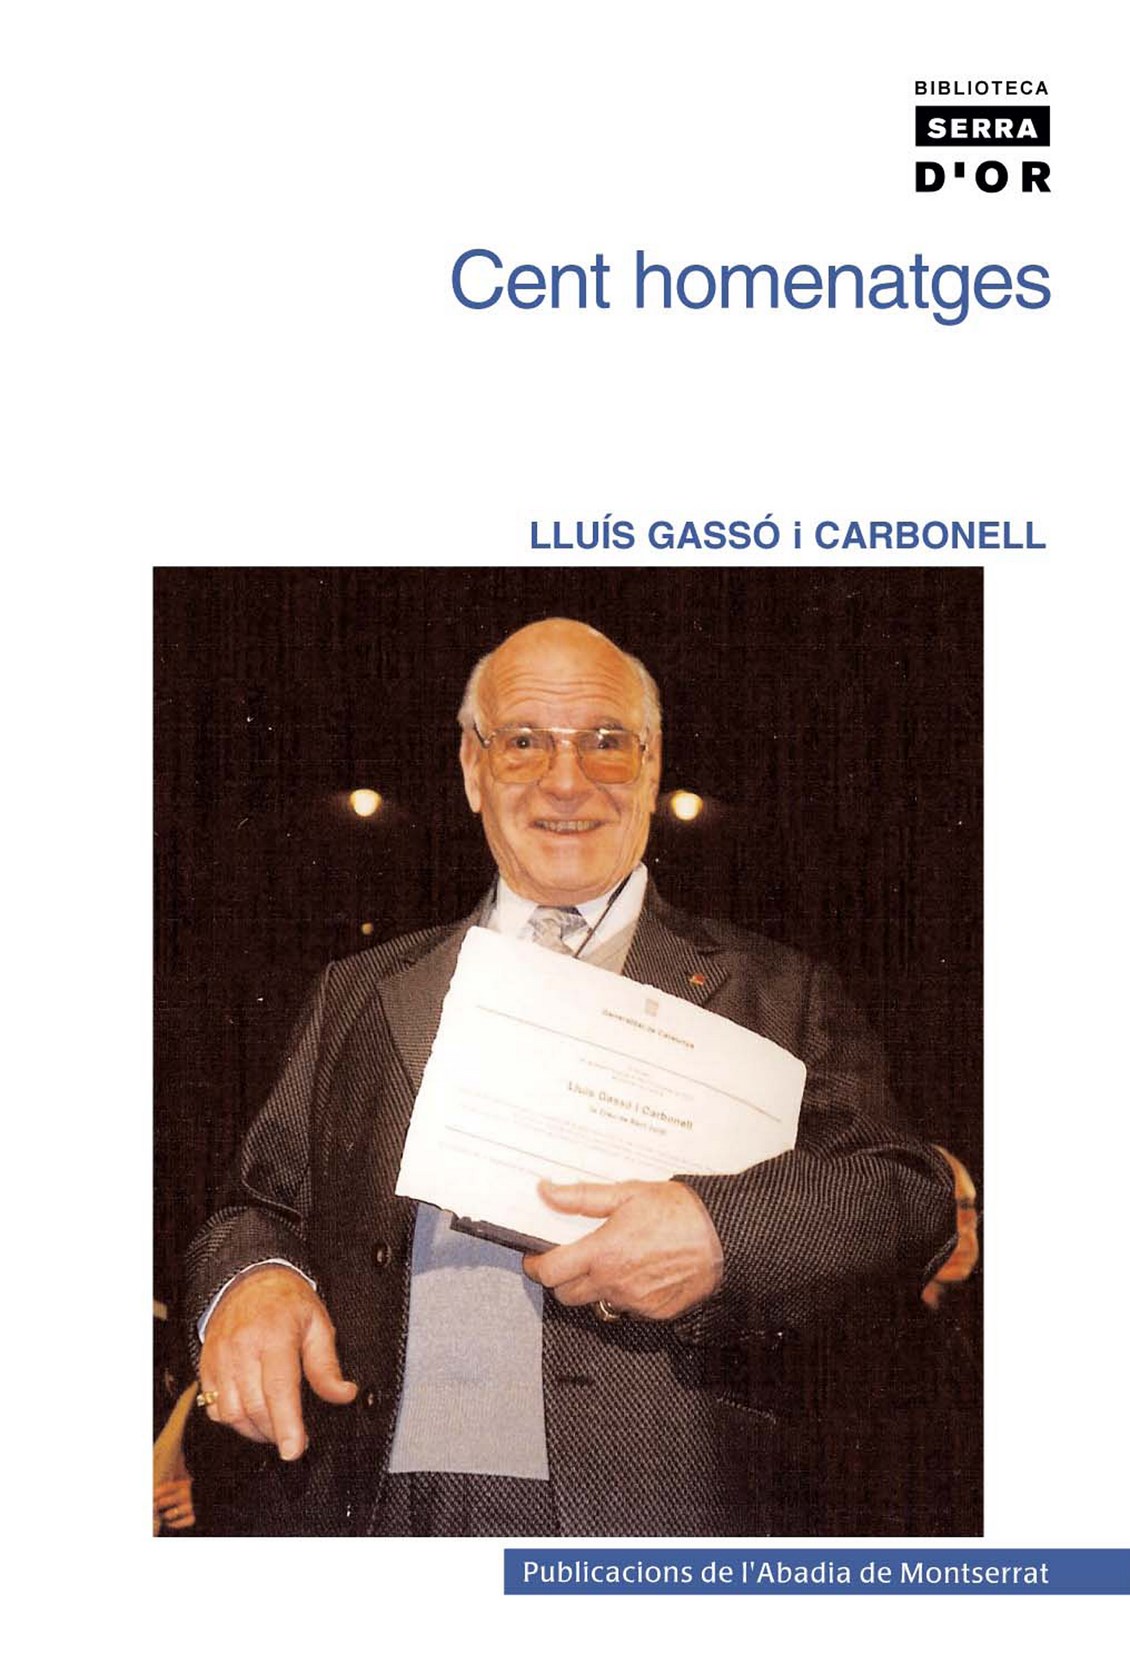 Lluís Gassó i Carbonell